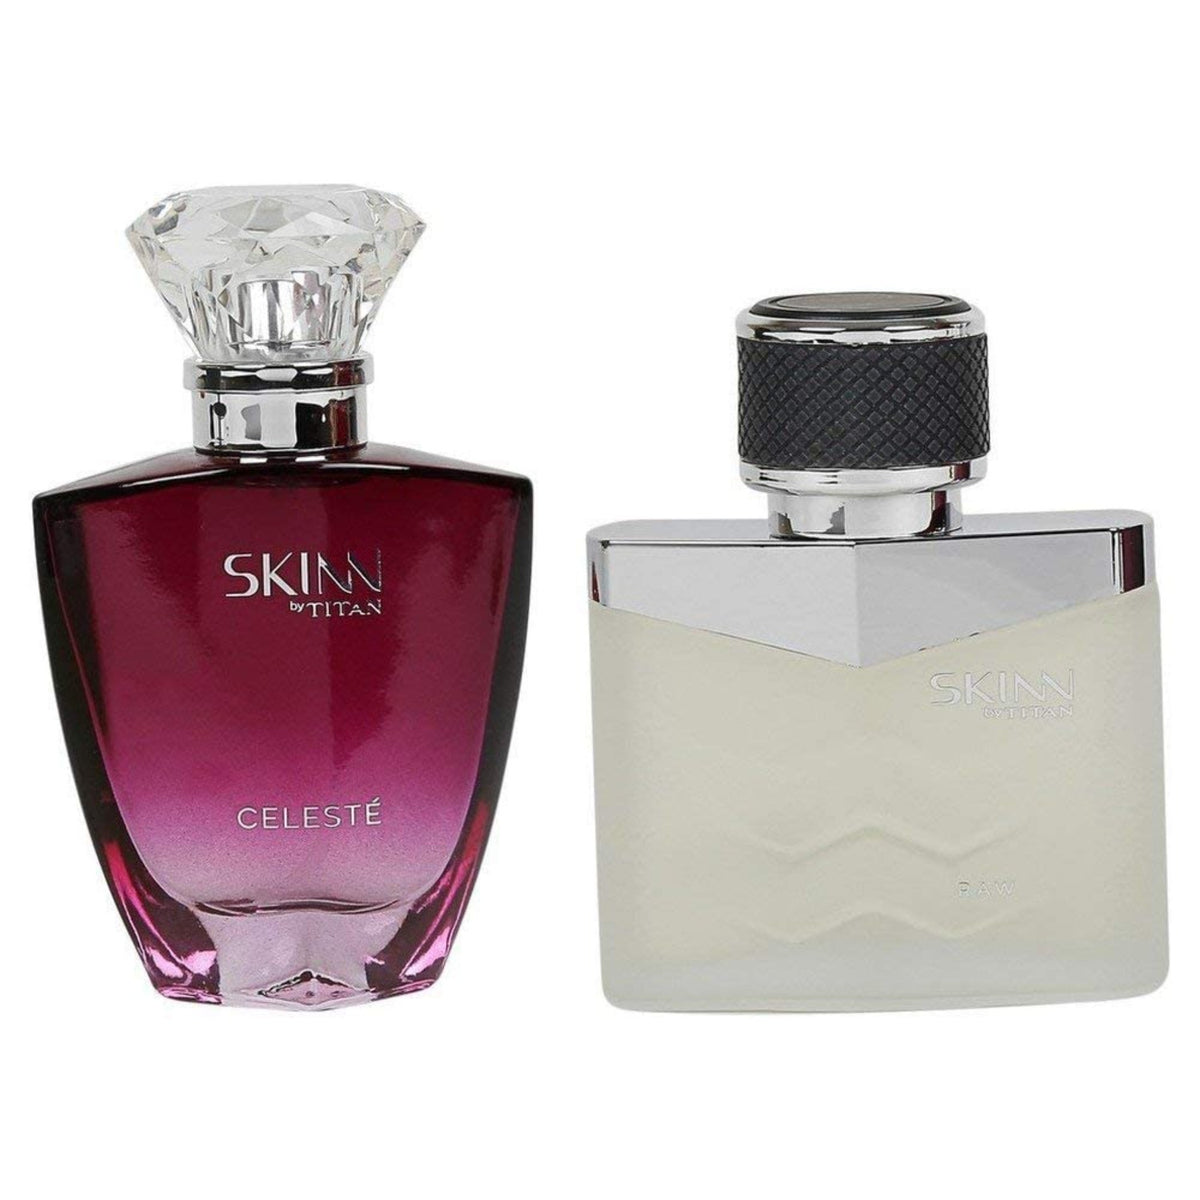 Skinn by Titan Raw 50ml And Celeste 50ml Perfumes Spray For Men And Women